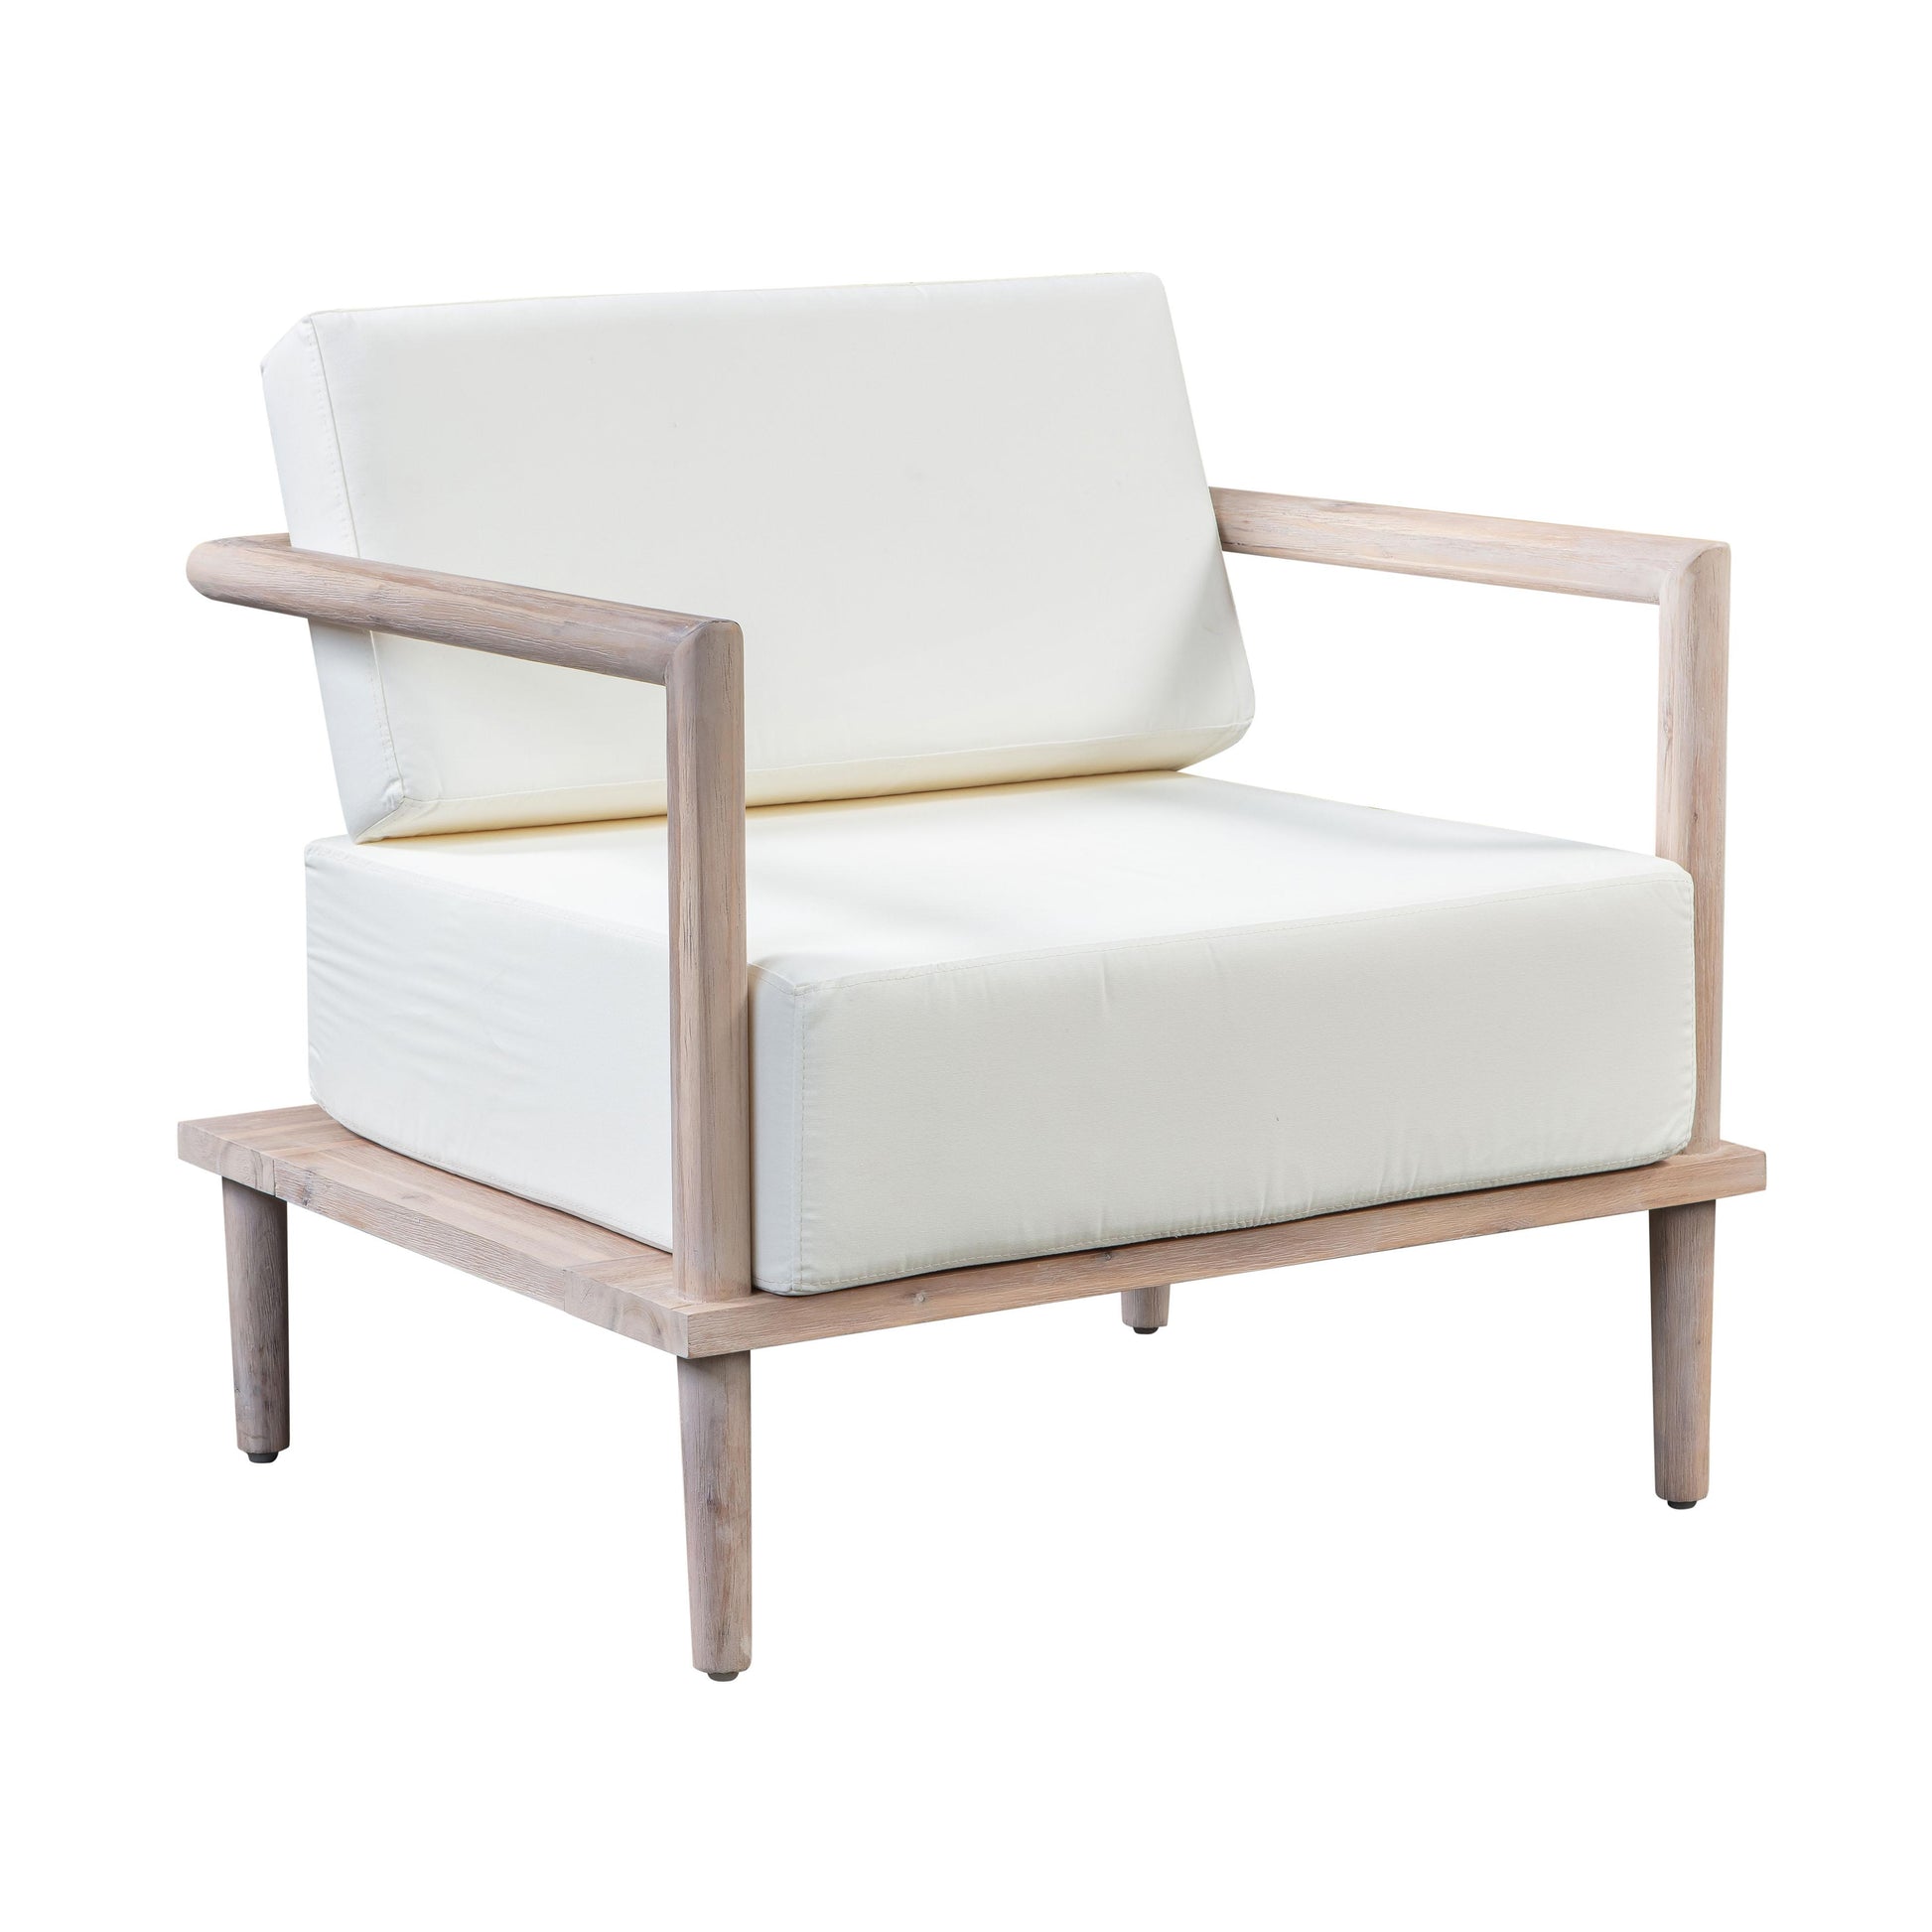 Tov Furniture Emerson Cream Outdoor Lounge Chair